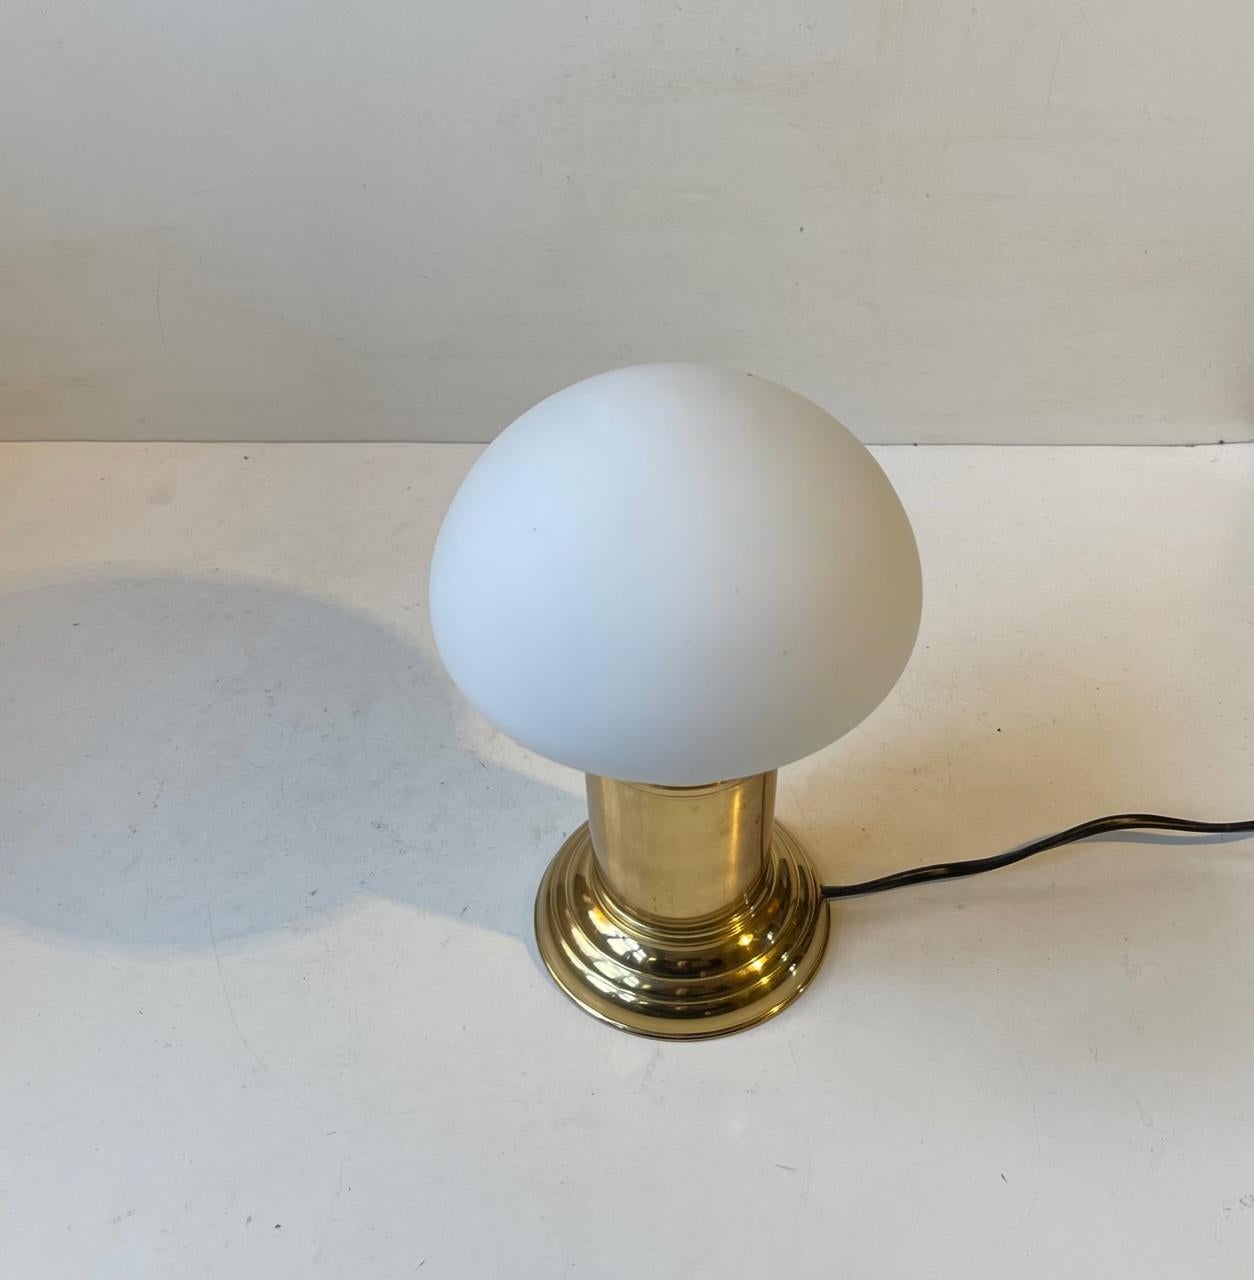 Scandinavian Modern Scandinavian Mushroom Table Lamp in Brass and White Glass, 1970s For Sale